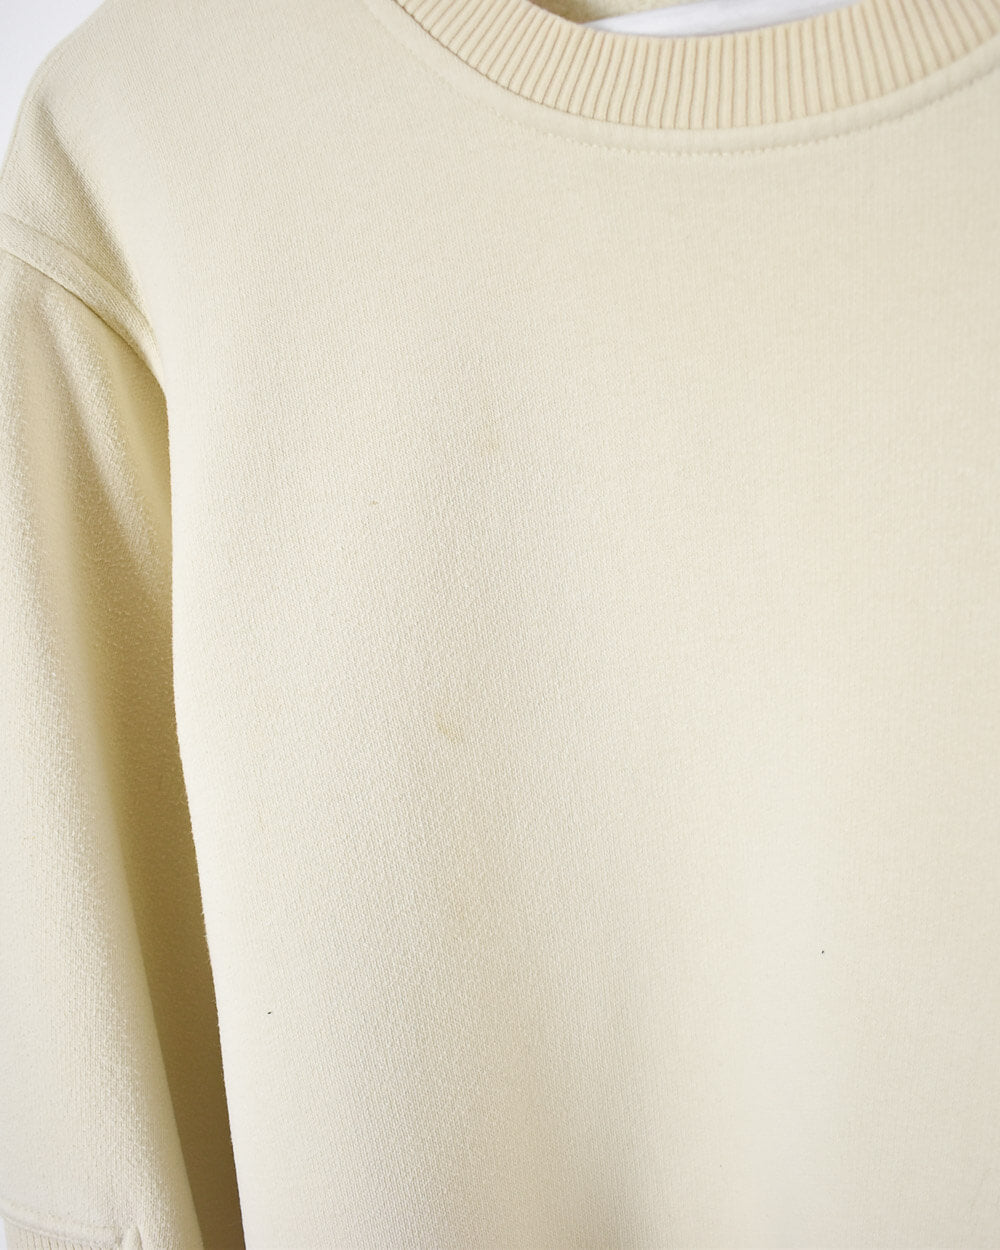 Neutral Adidas Sweatshirt - Small